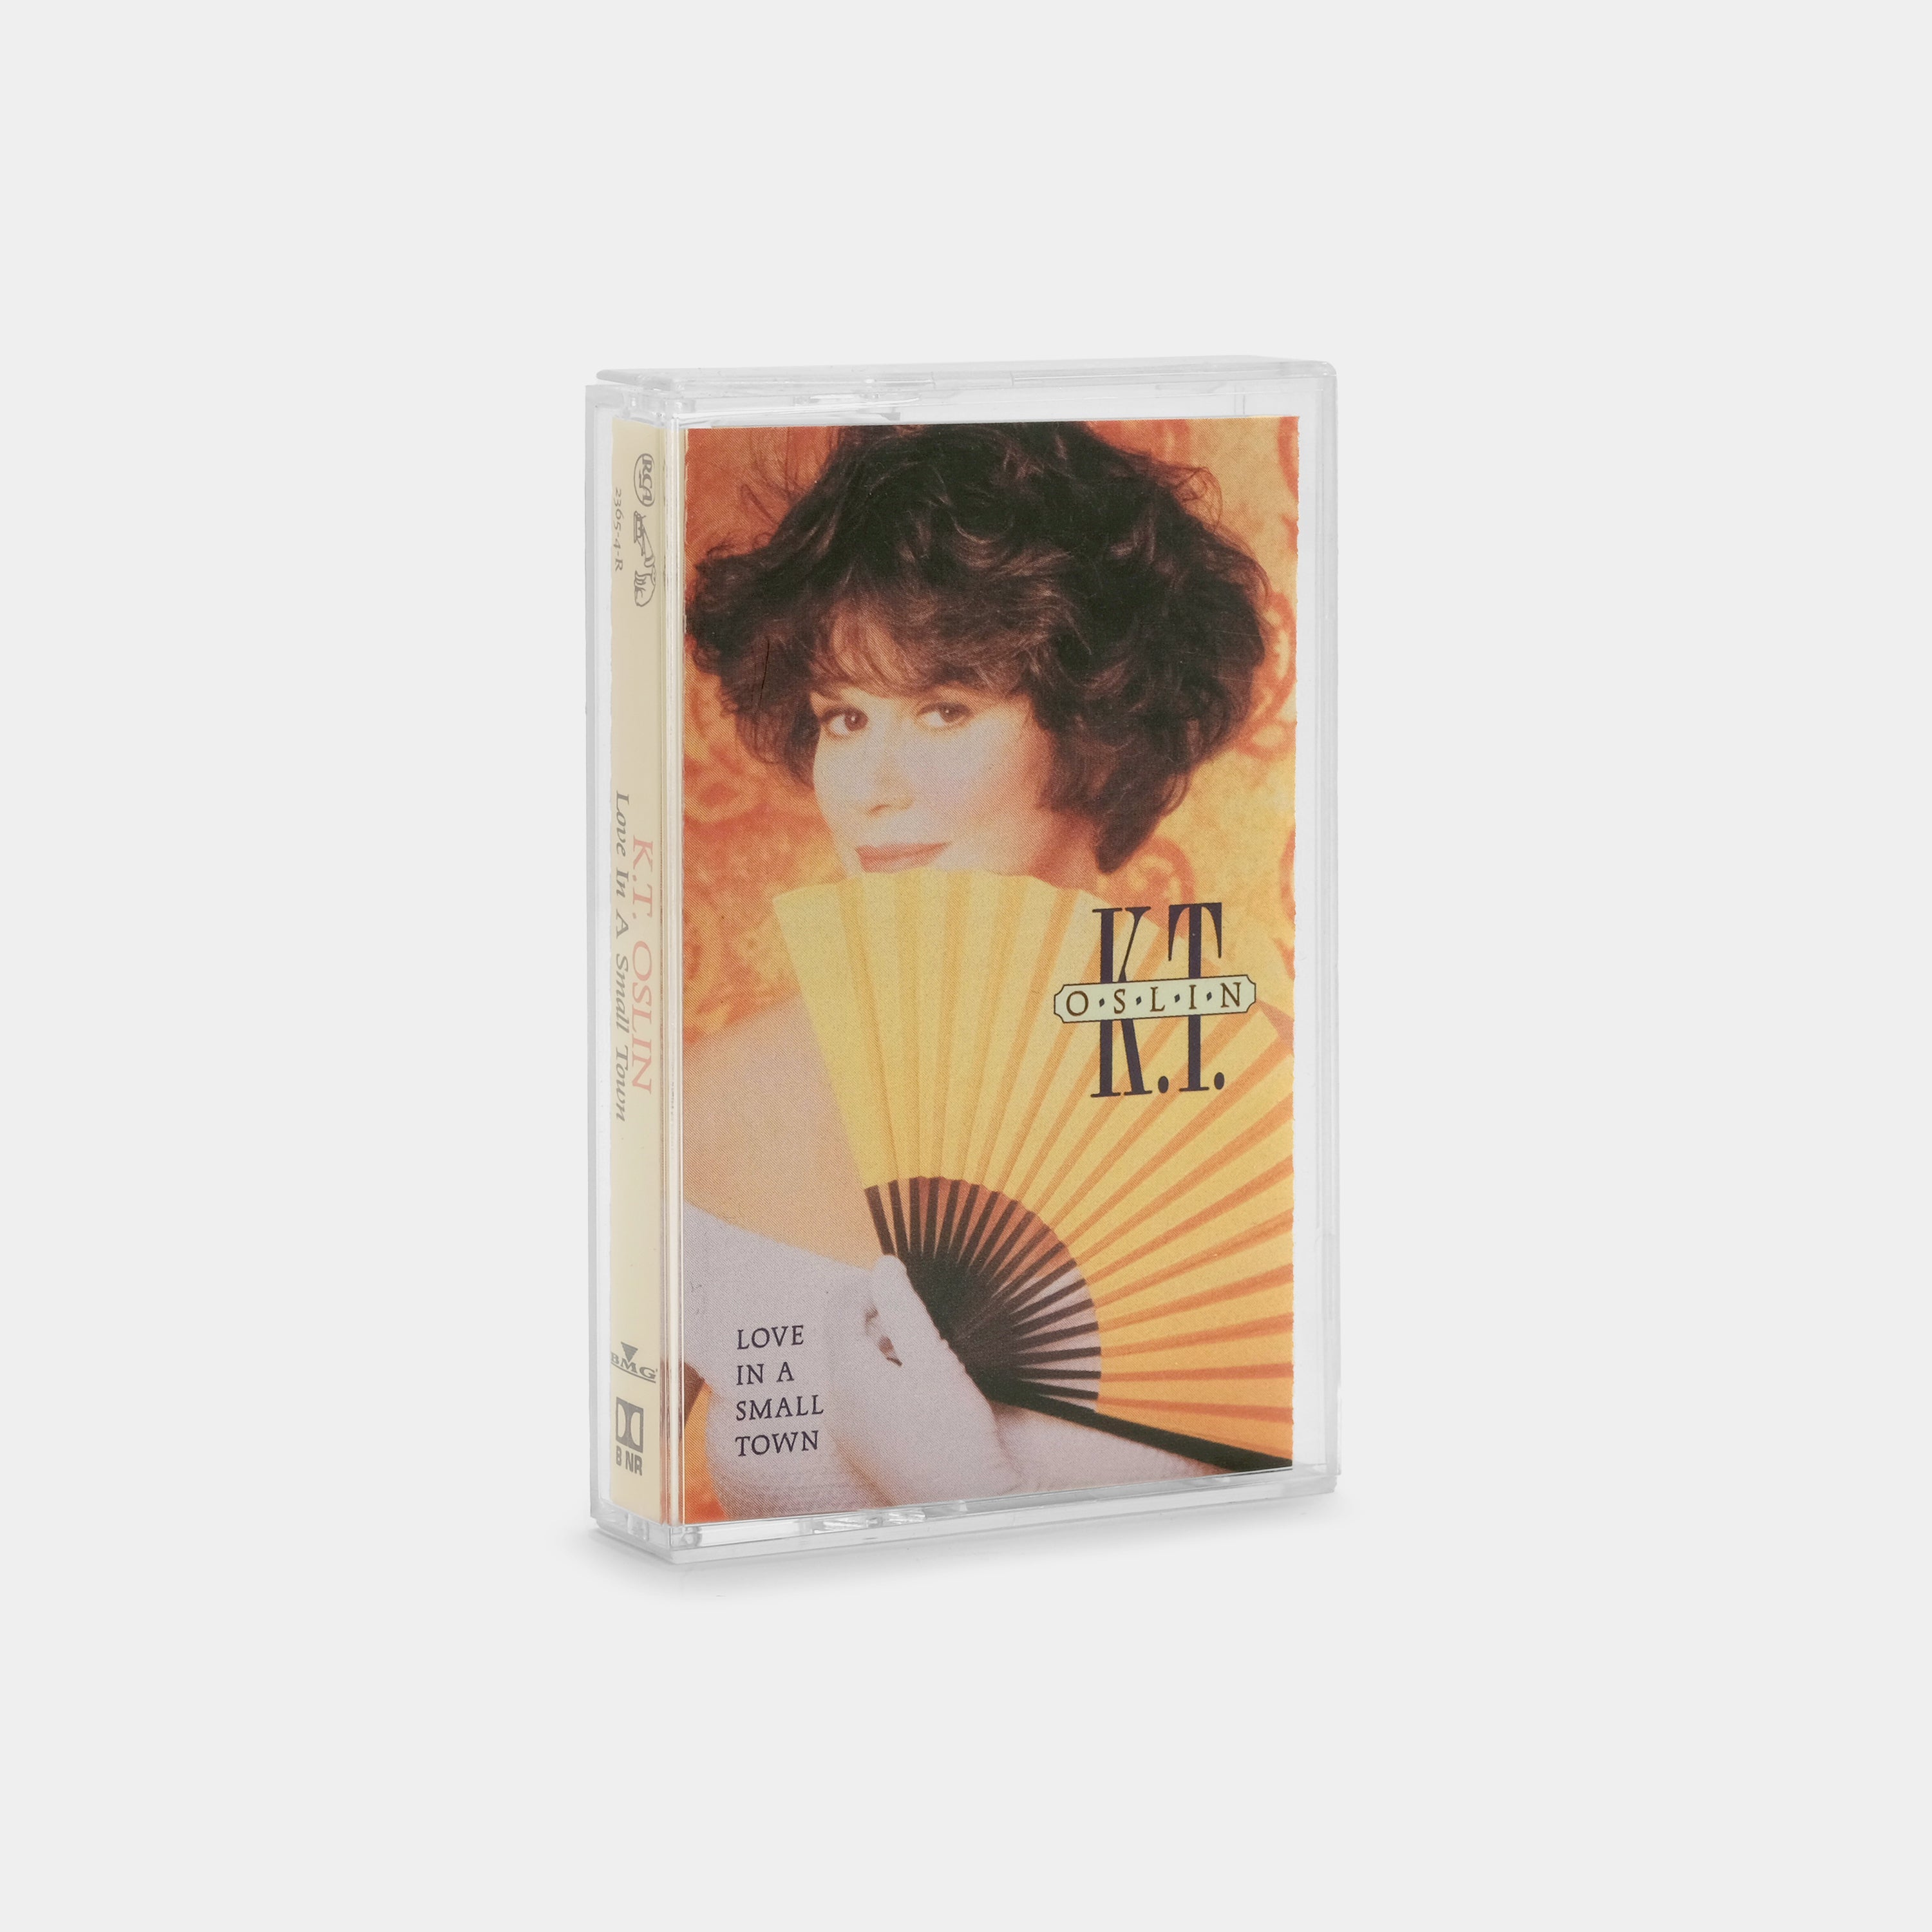 K.T. Oslin - Love In A Small Town Cassette Tape